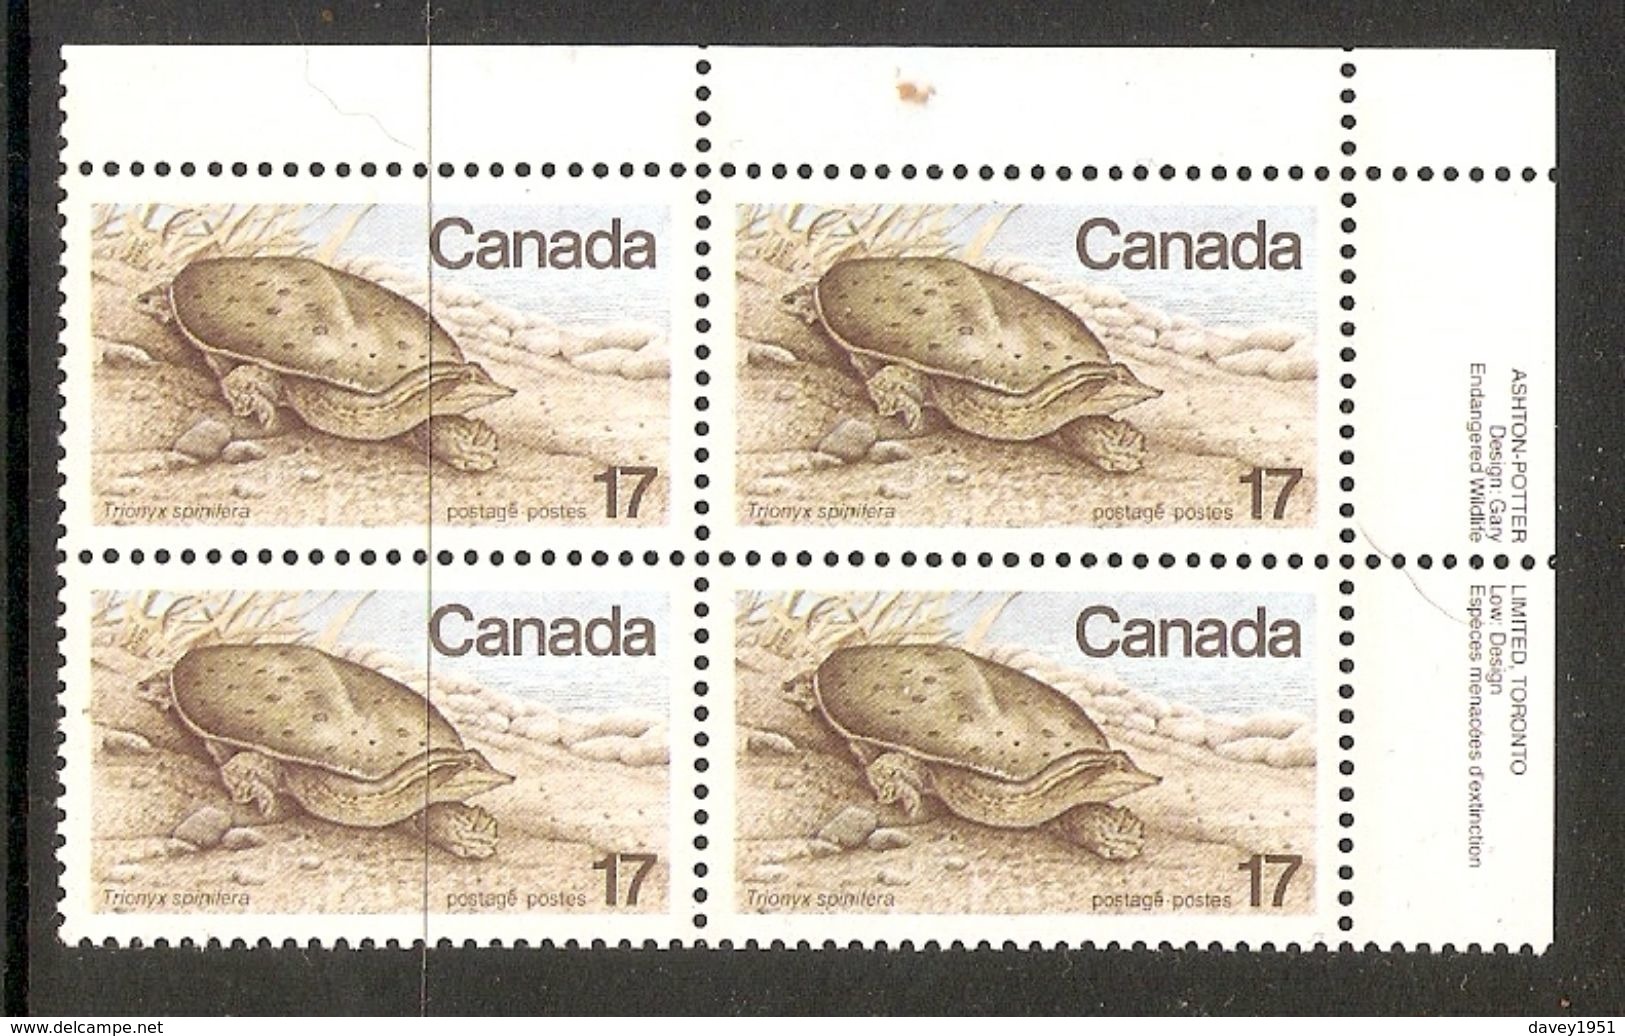 006388 Canada 1979 Wildlife 17c Plate Block UR MNH - Plate Number & Inscriptions